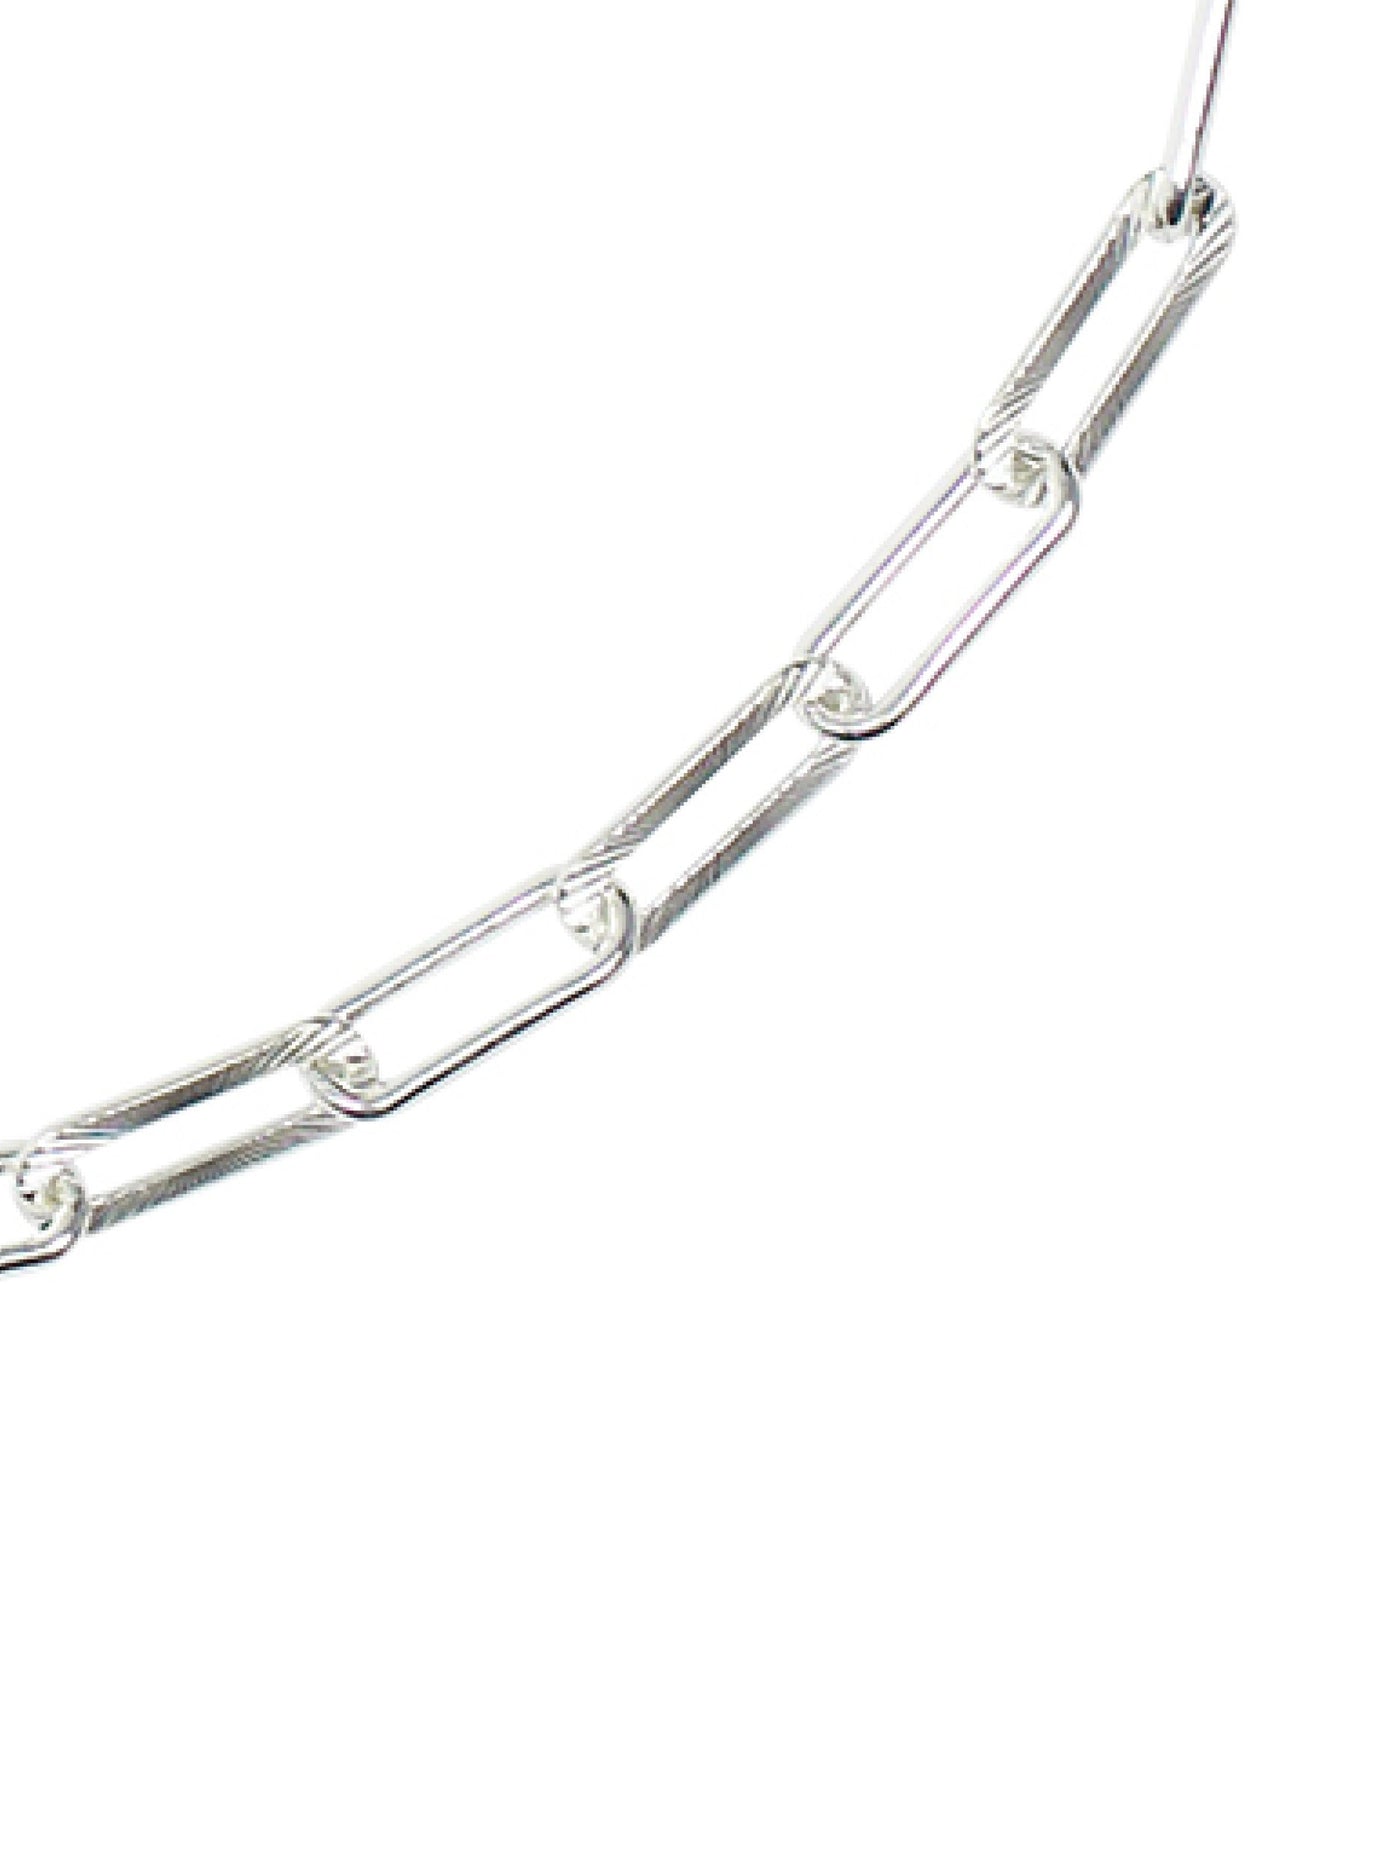 George Long Link Bracelet in Gold or Silver